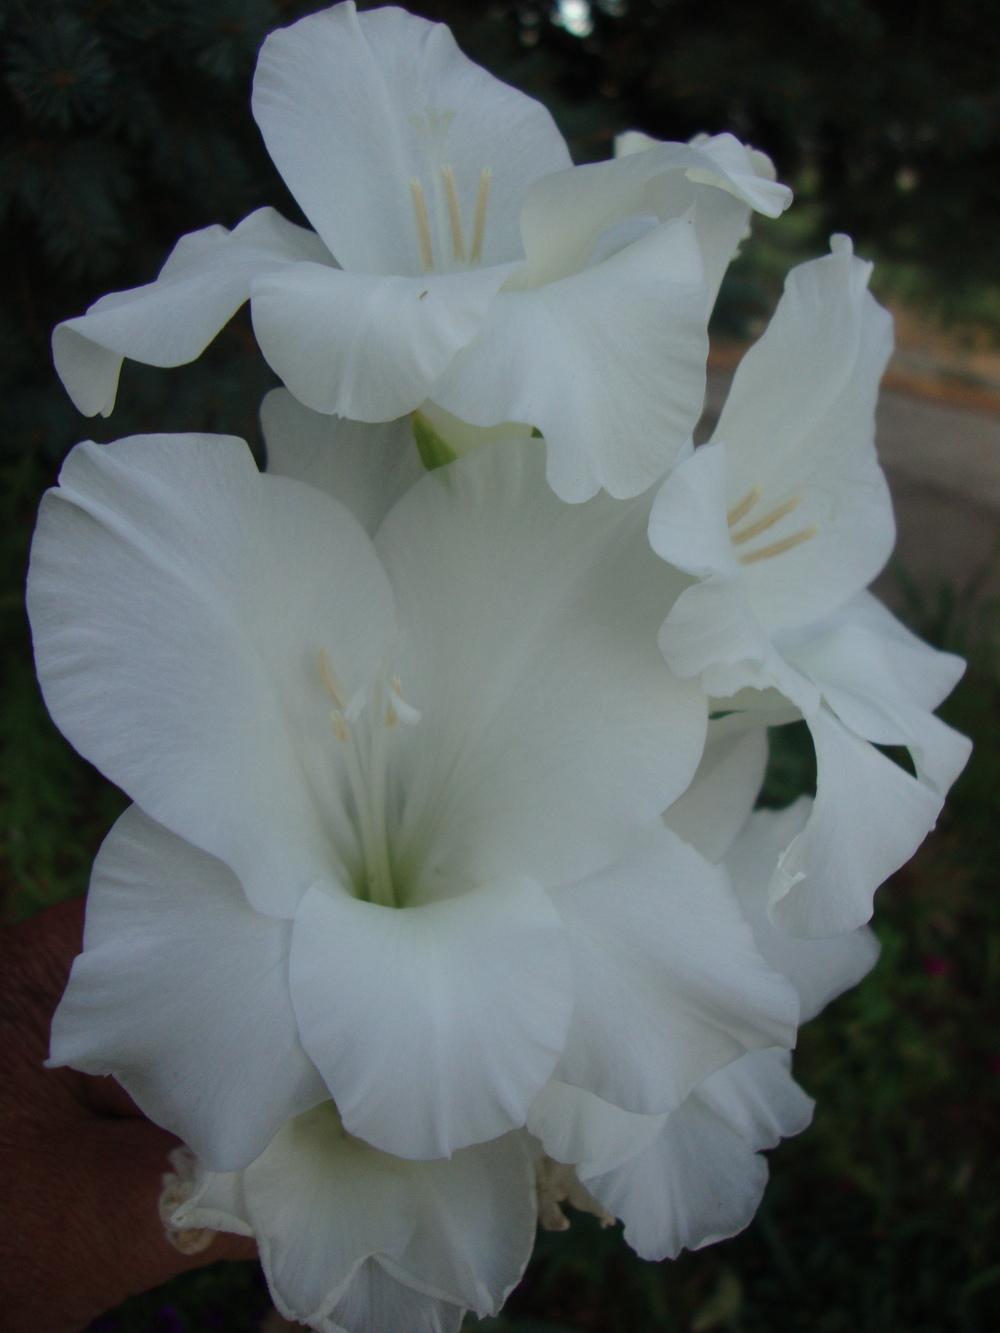 Photo of Gladiola (Gladiolus) uploaded by Paul2032